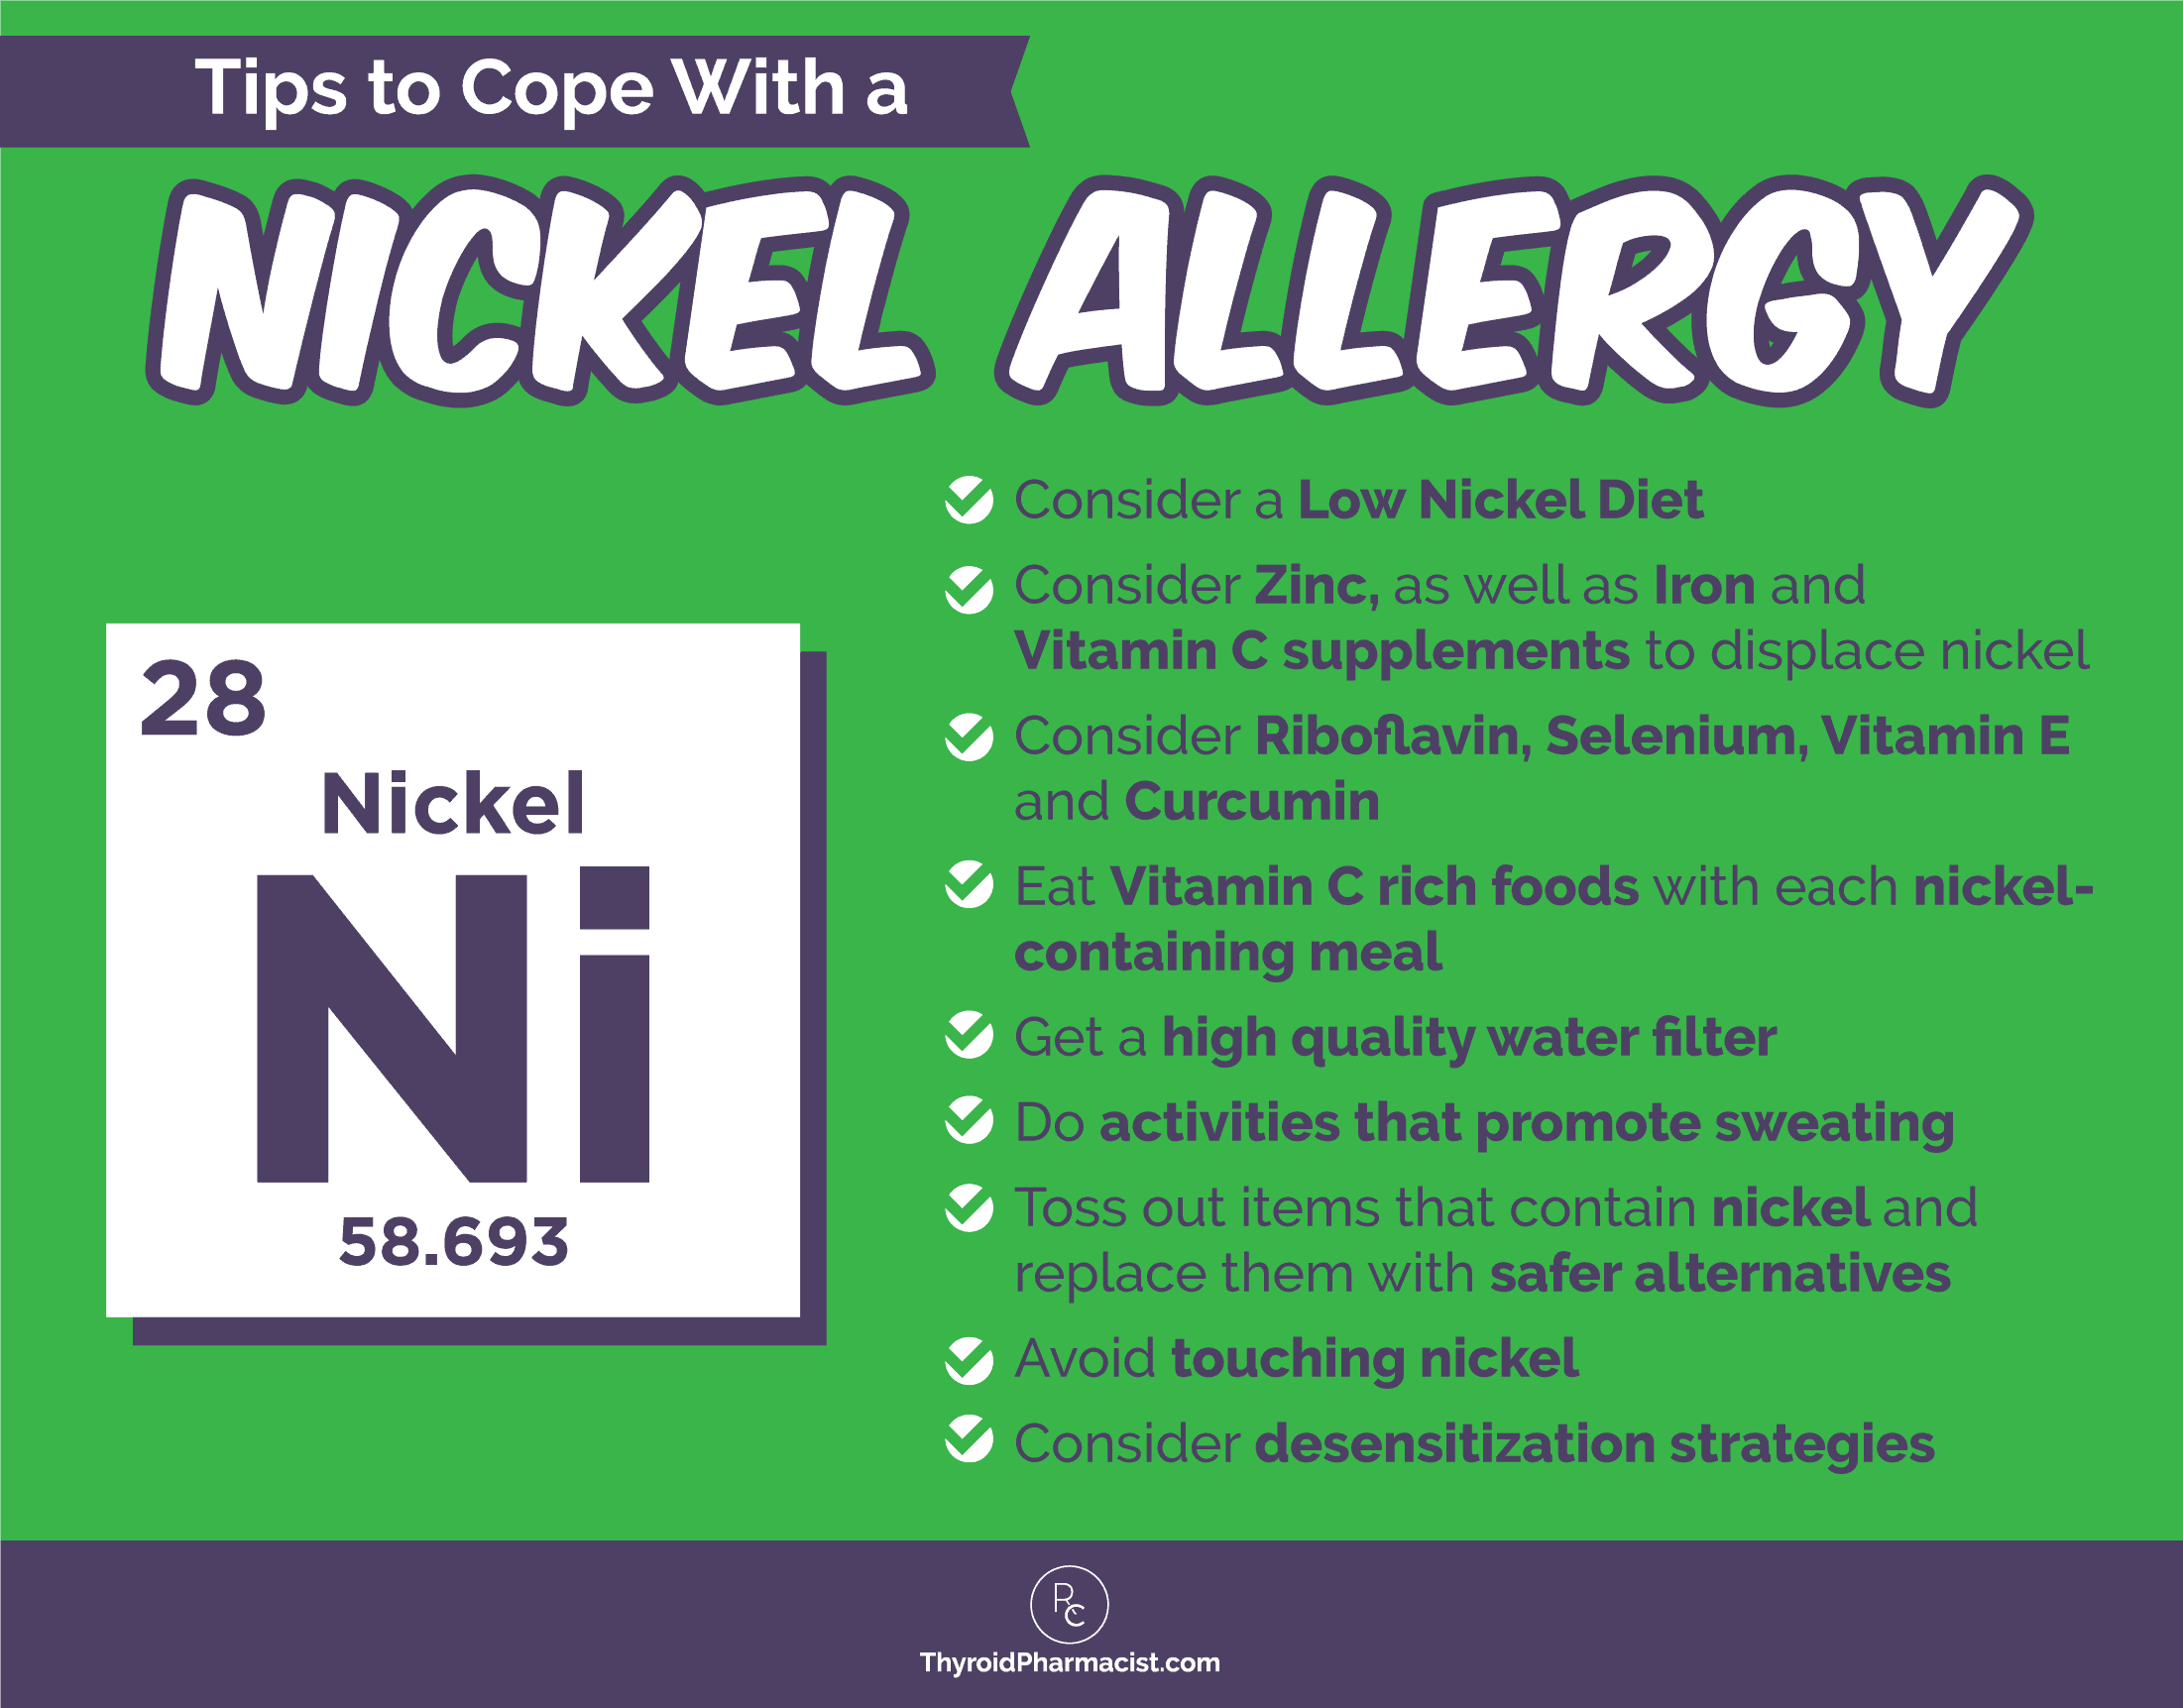 Nickel allergy